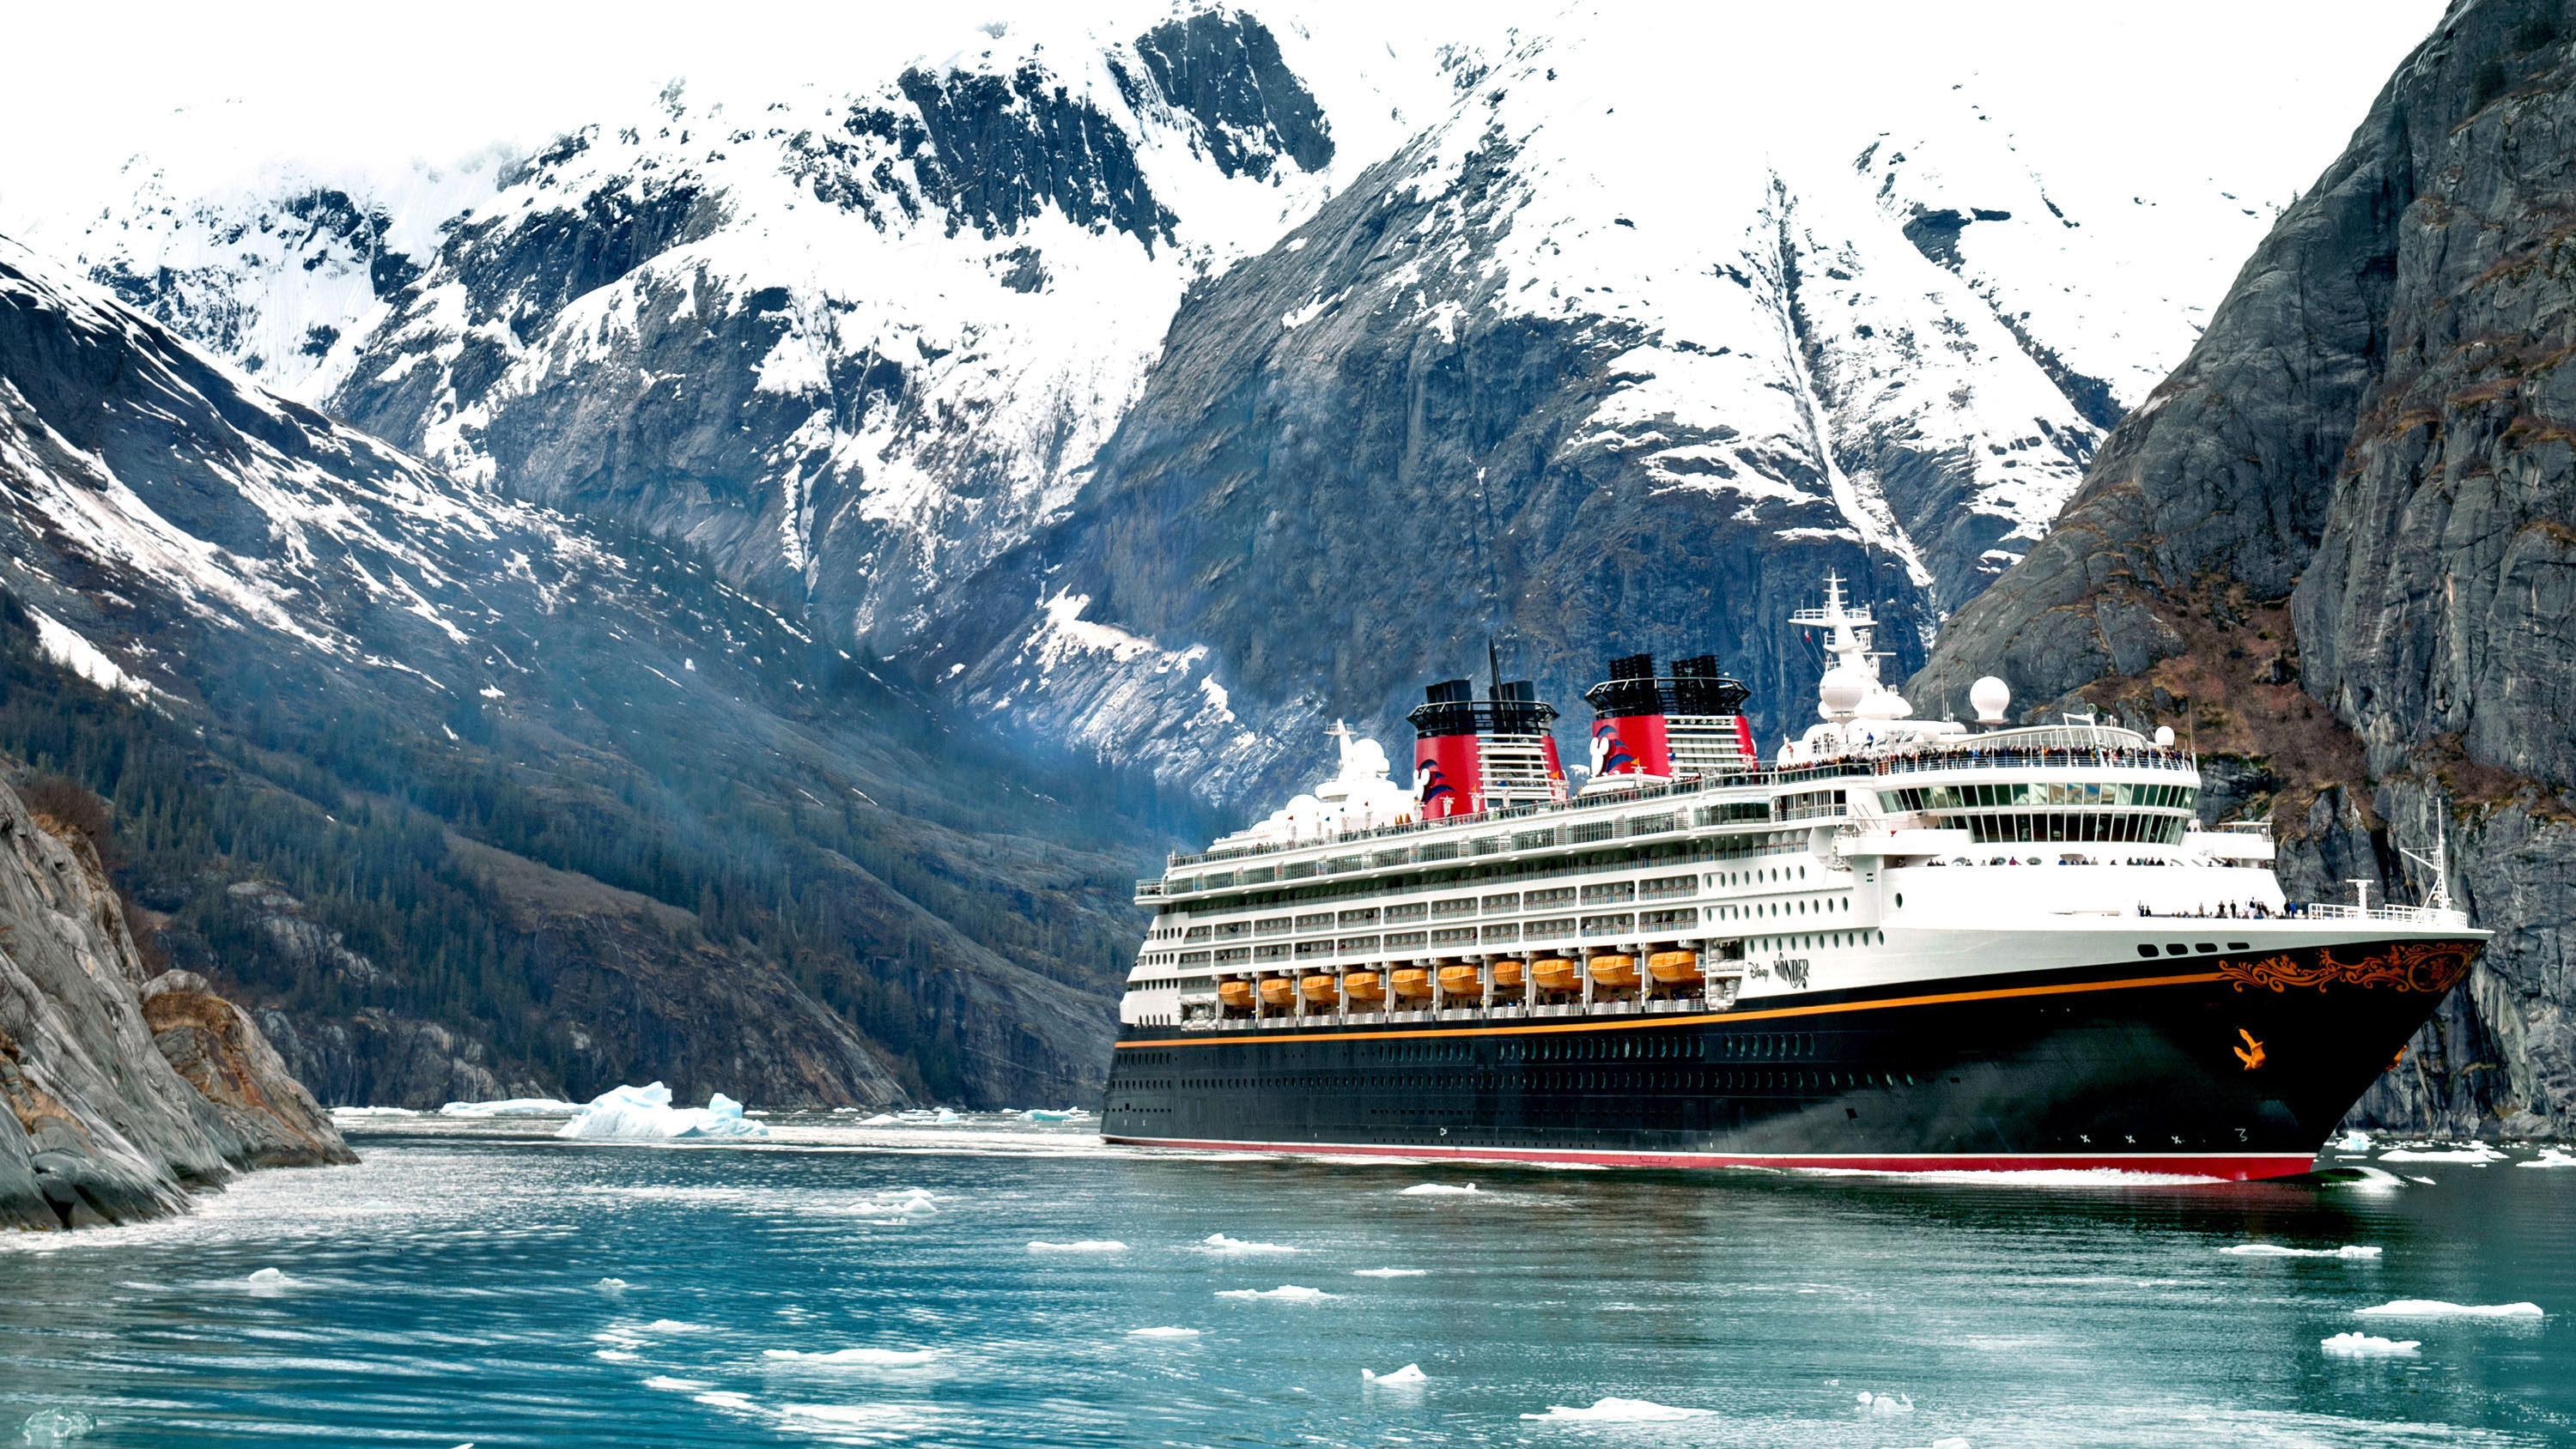 La temporada de cruceros Canadá y Alaska 2020 se cancela - Foro Cruceros